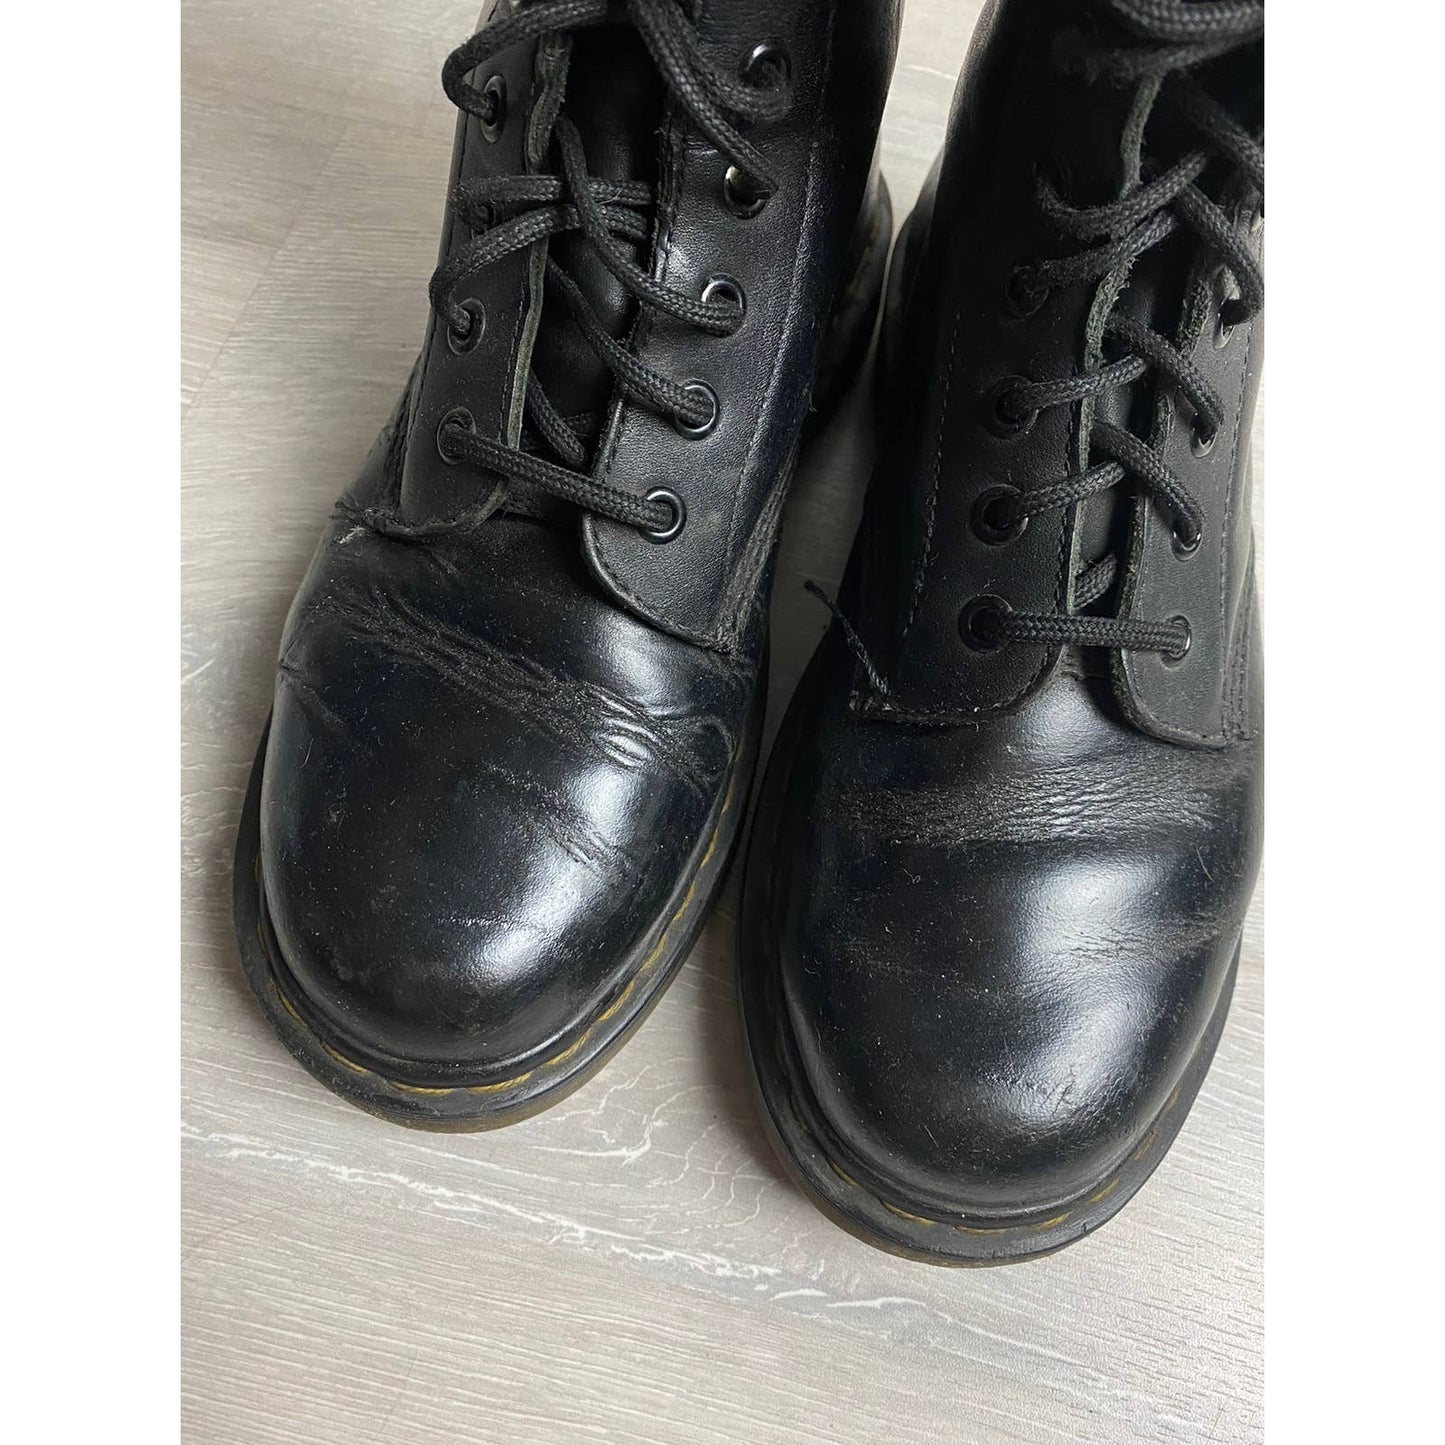 Dr. Martens boots 1460 black